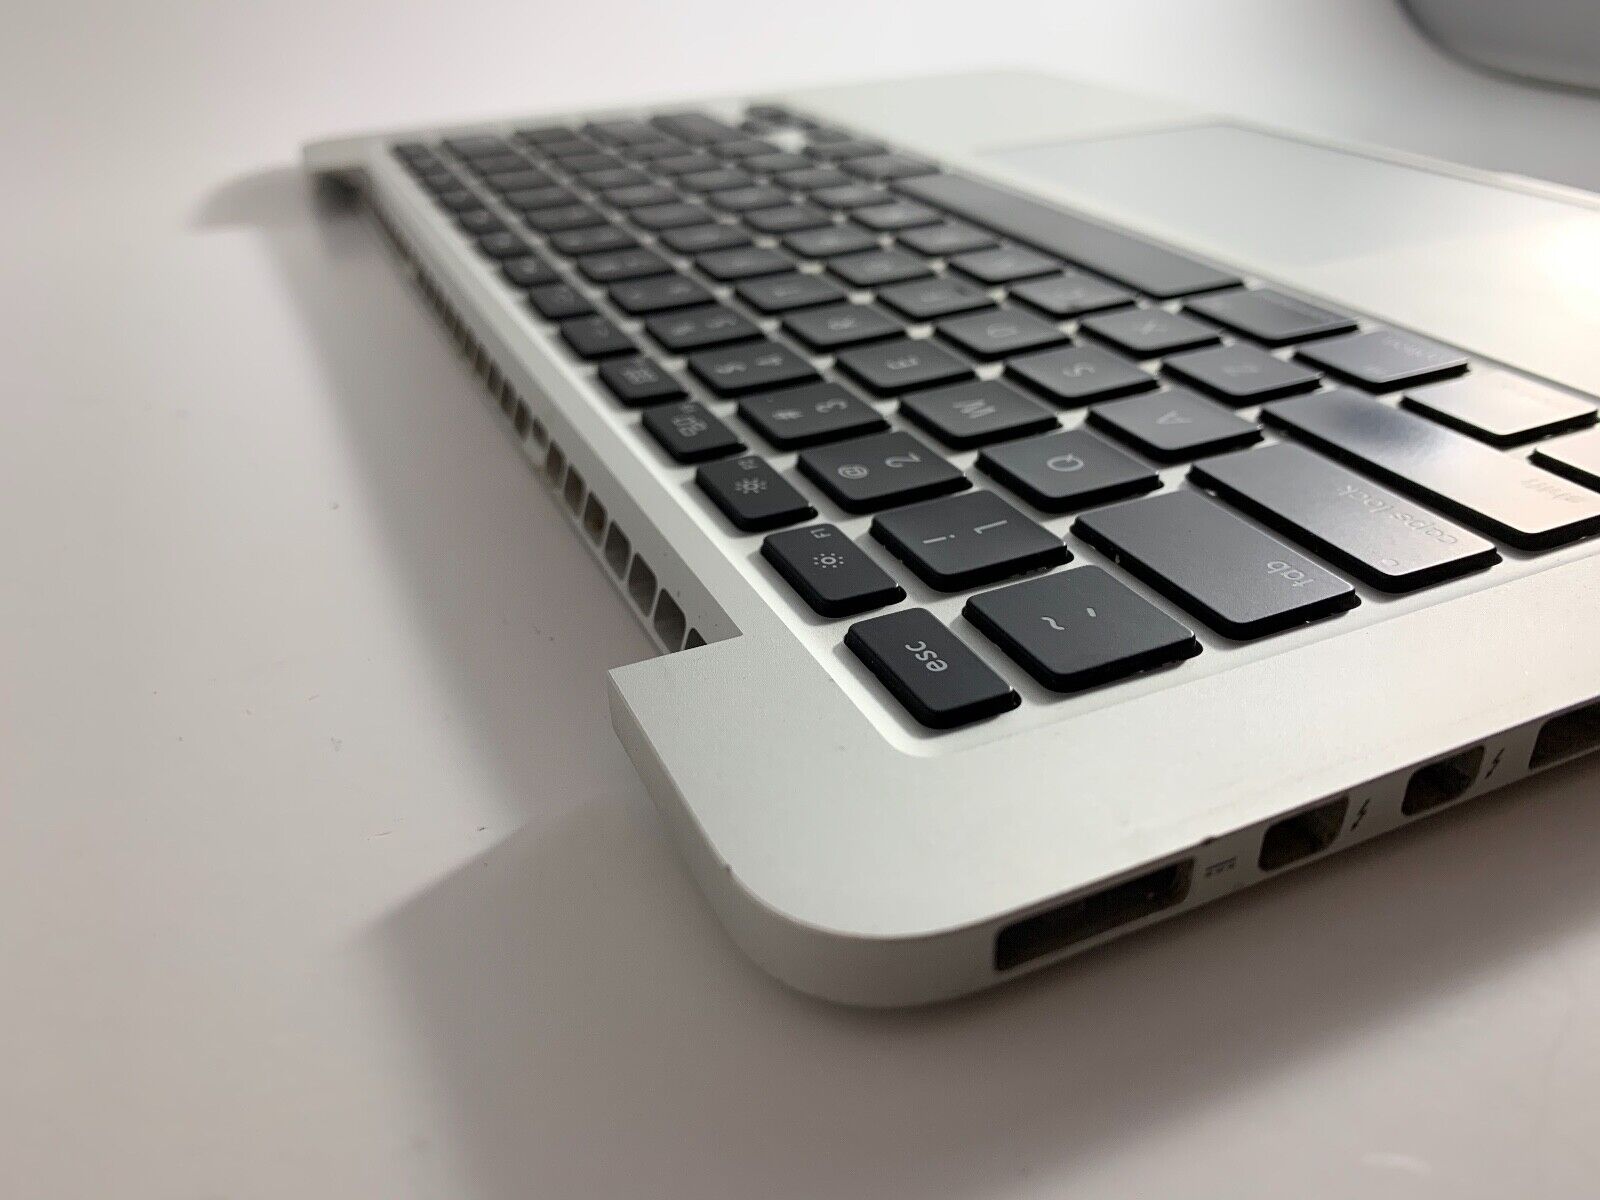 Real Topcase- Battery- Keyboard-trackpad MacBook Pro Retina 13" A1425 Early 2013